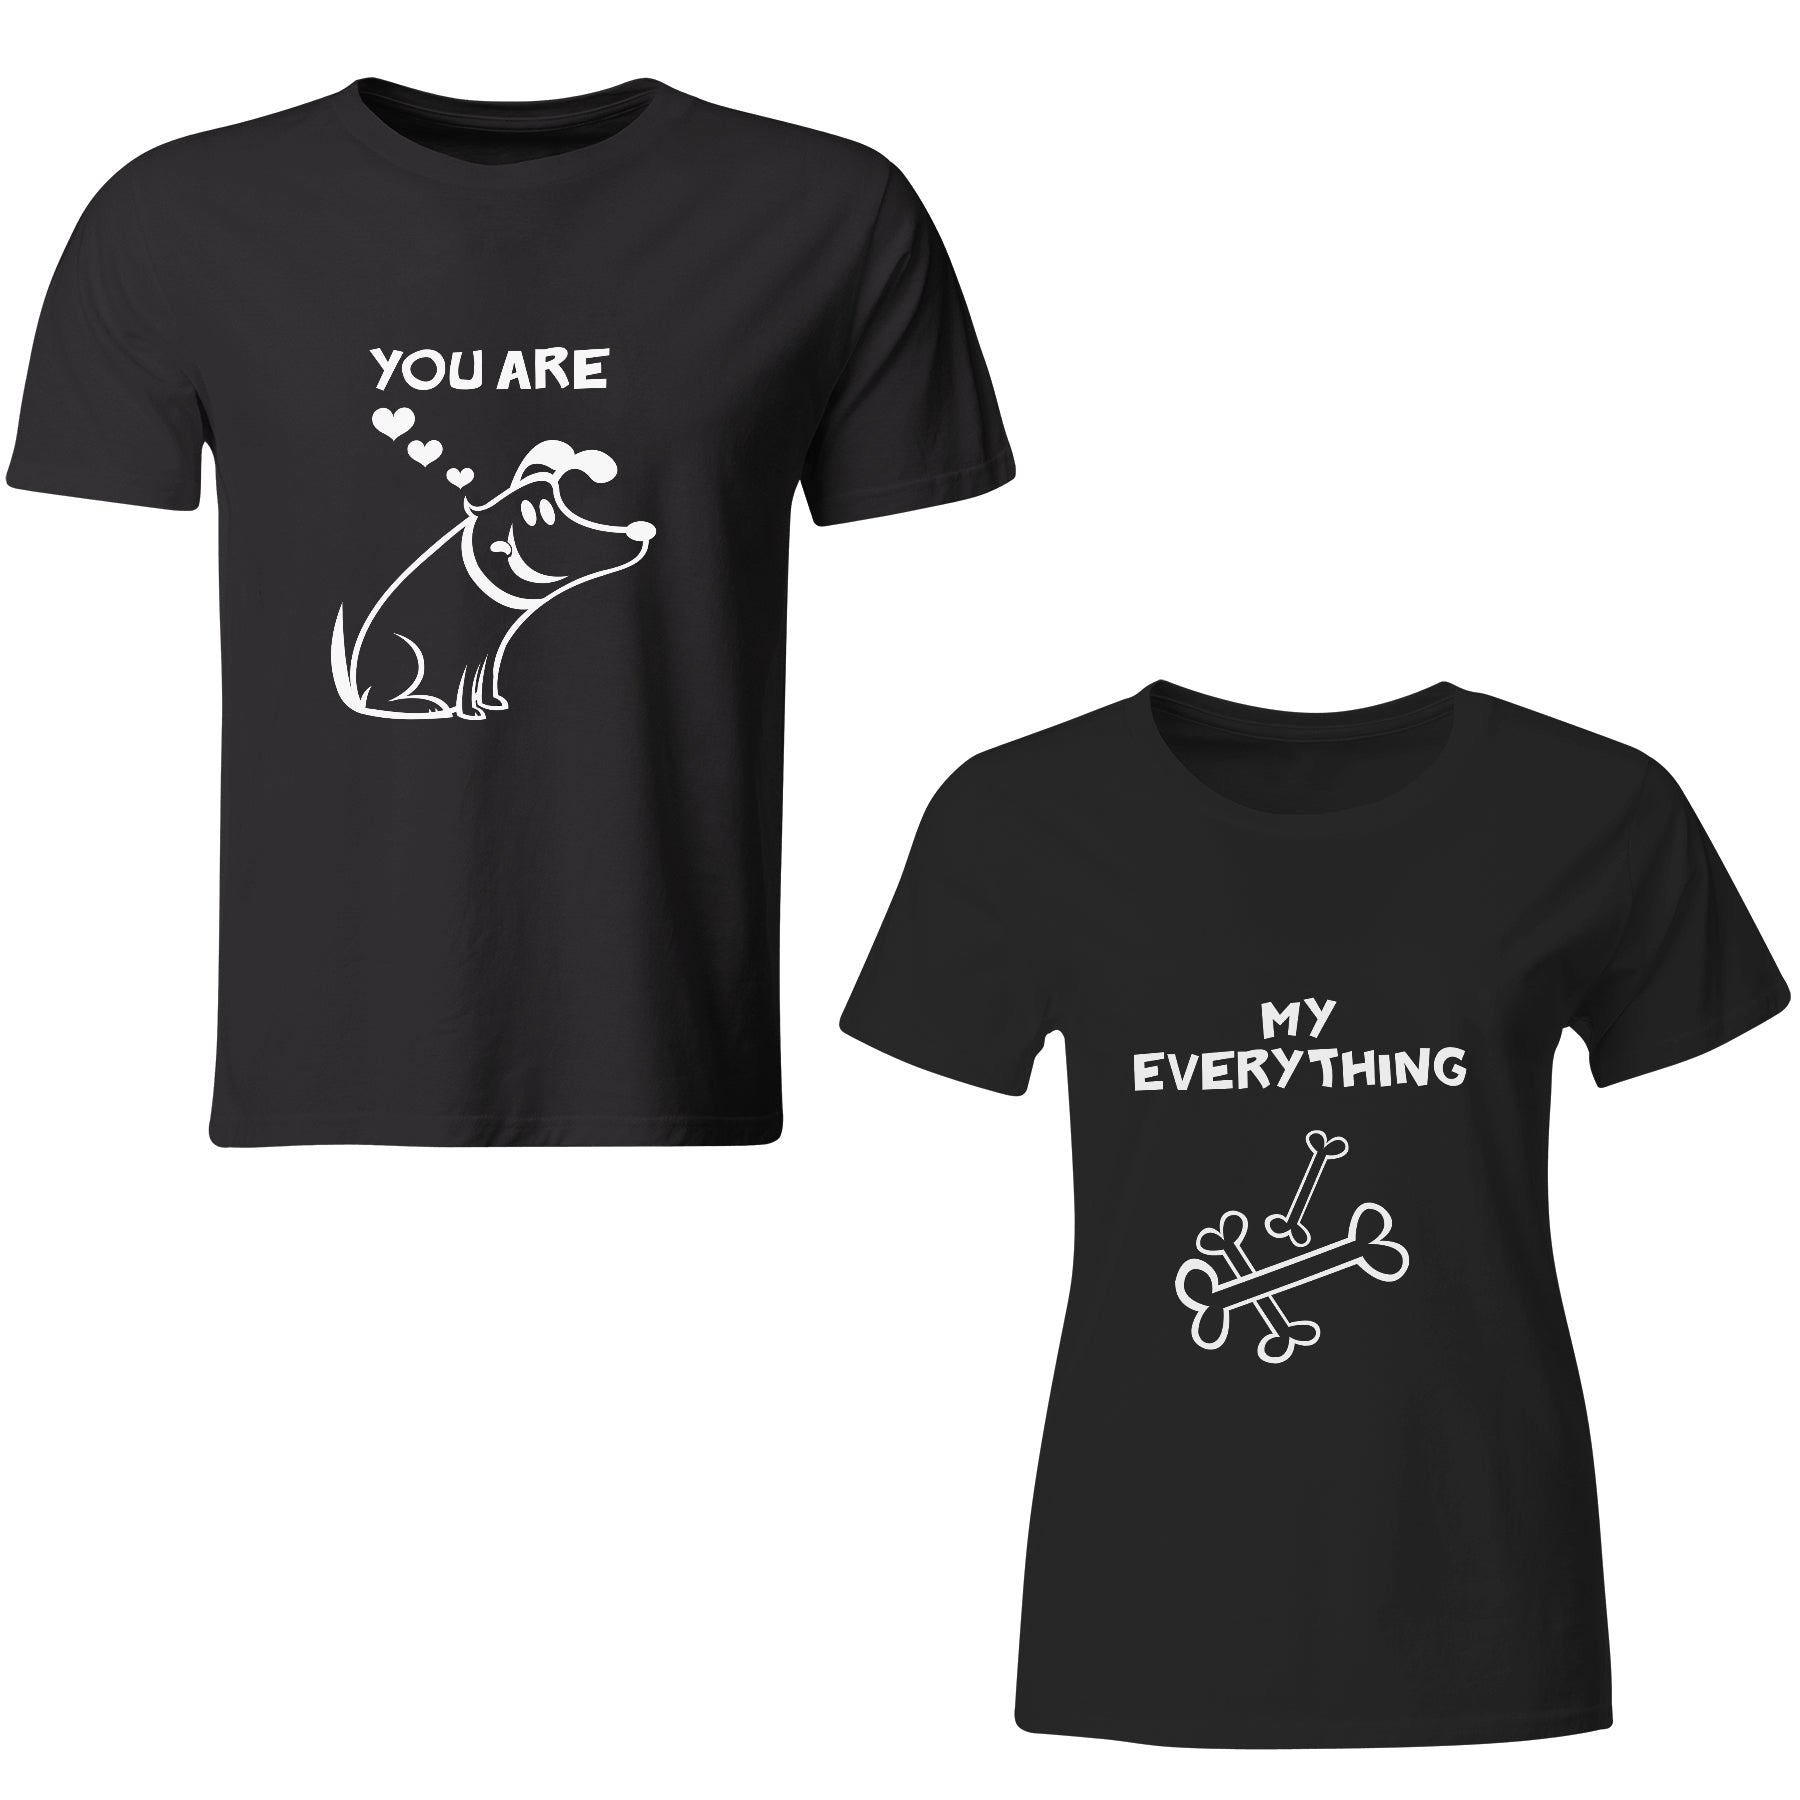 My Everything matching Couple T shirts- Black